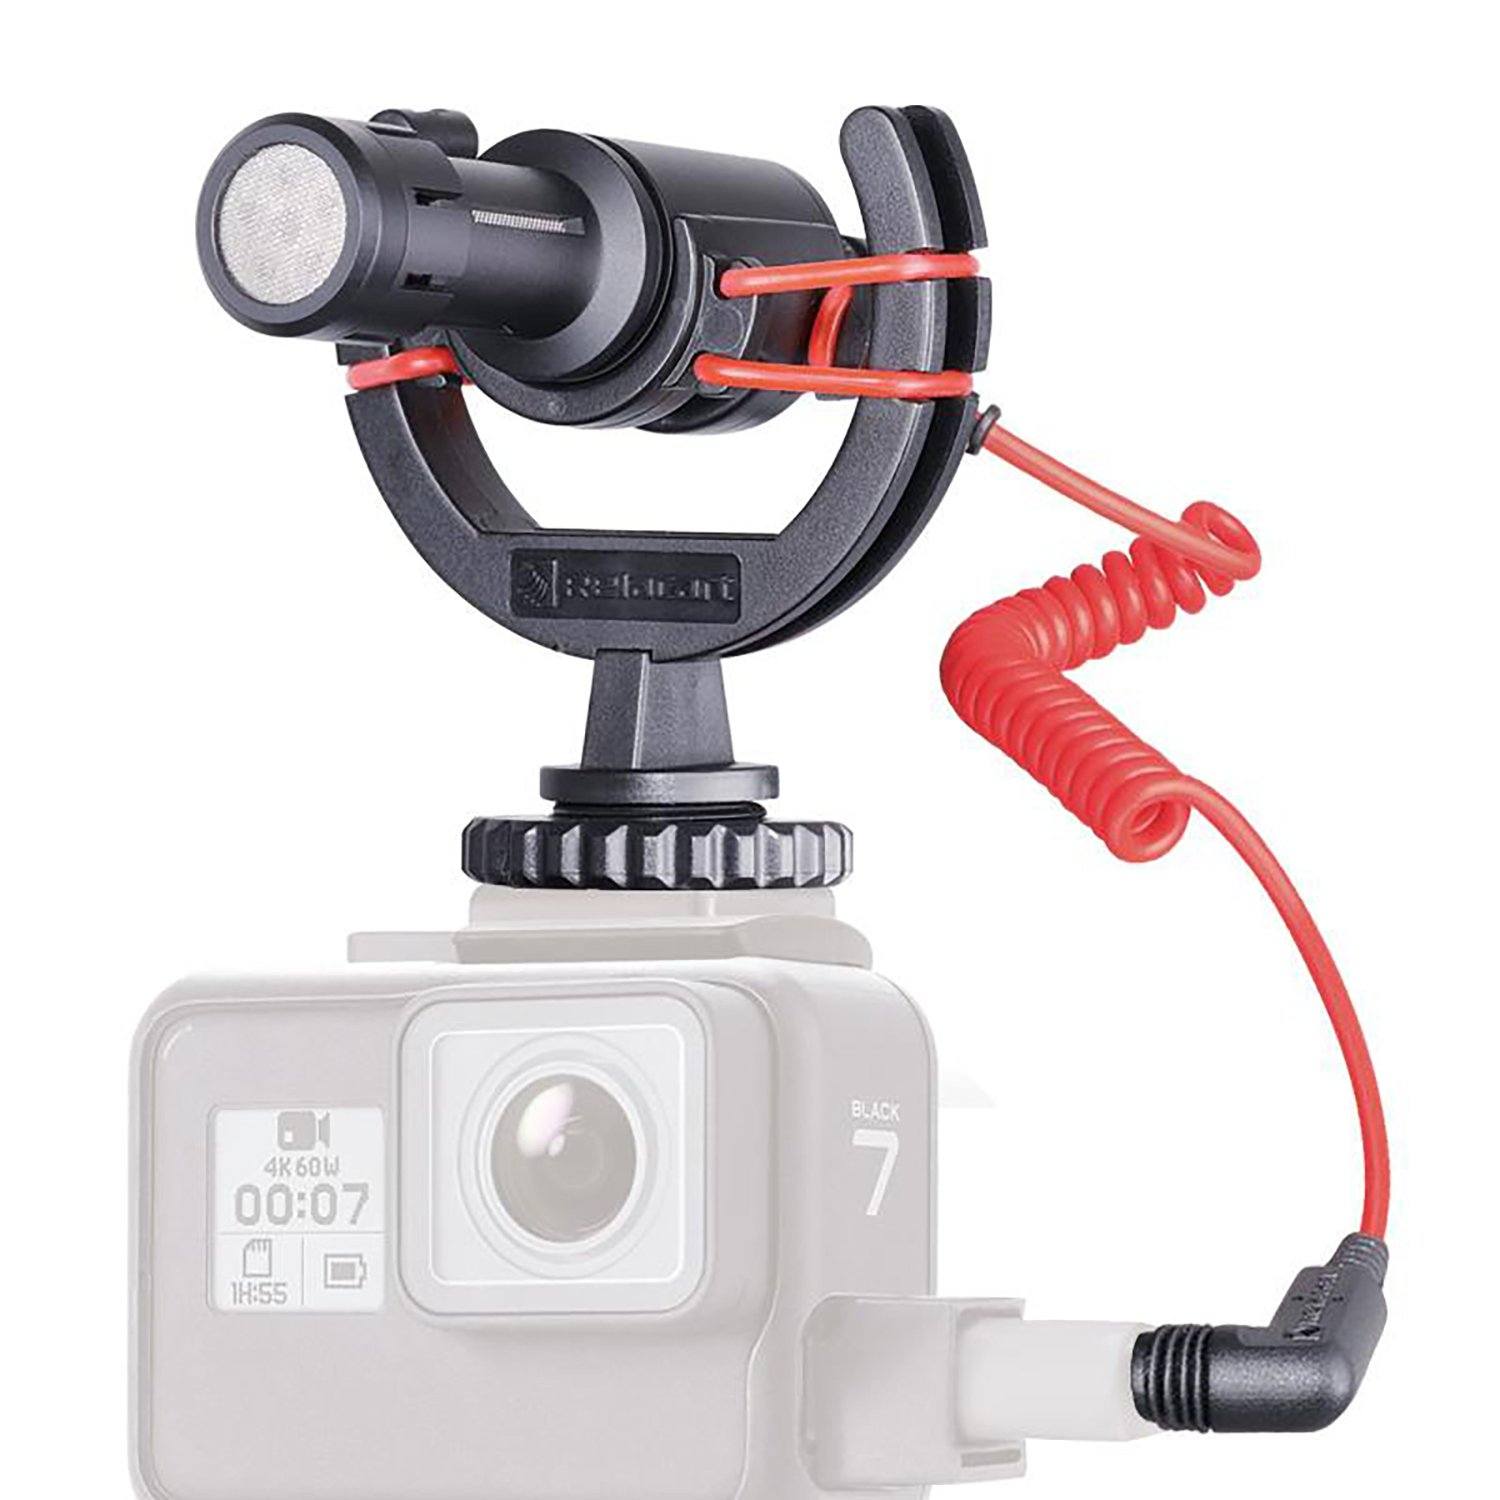 Relacart MU1 Directional Camera Microphone Default Relacart 